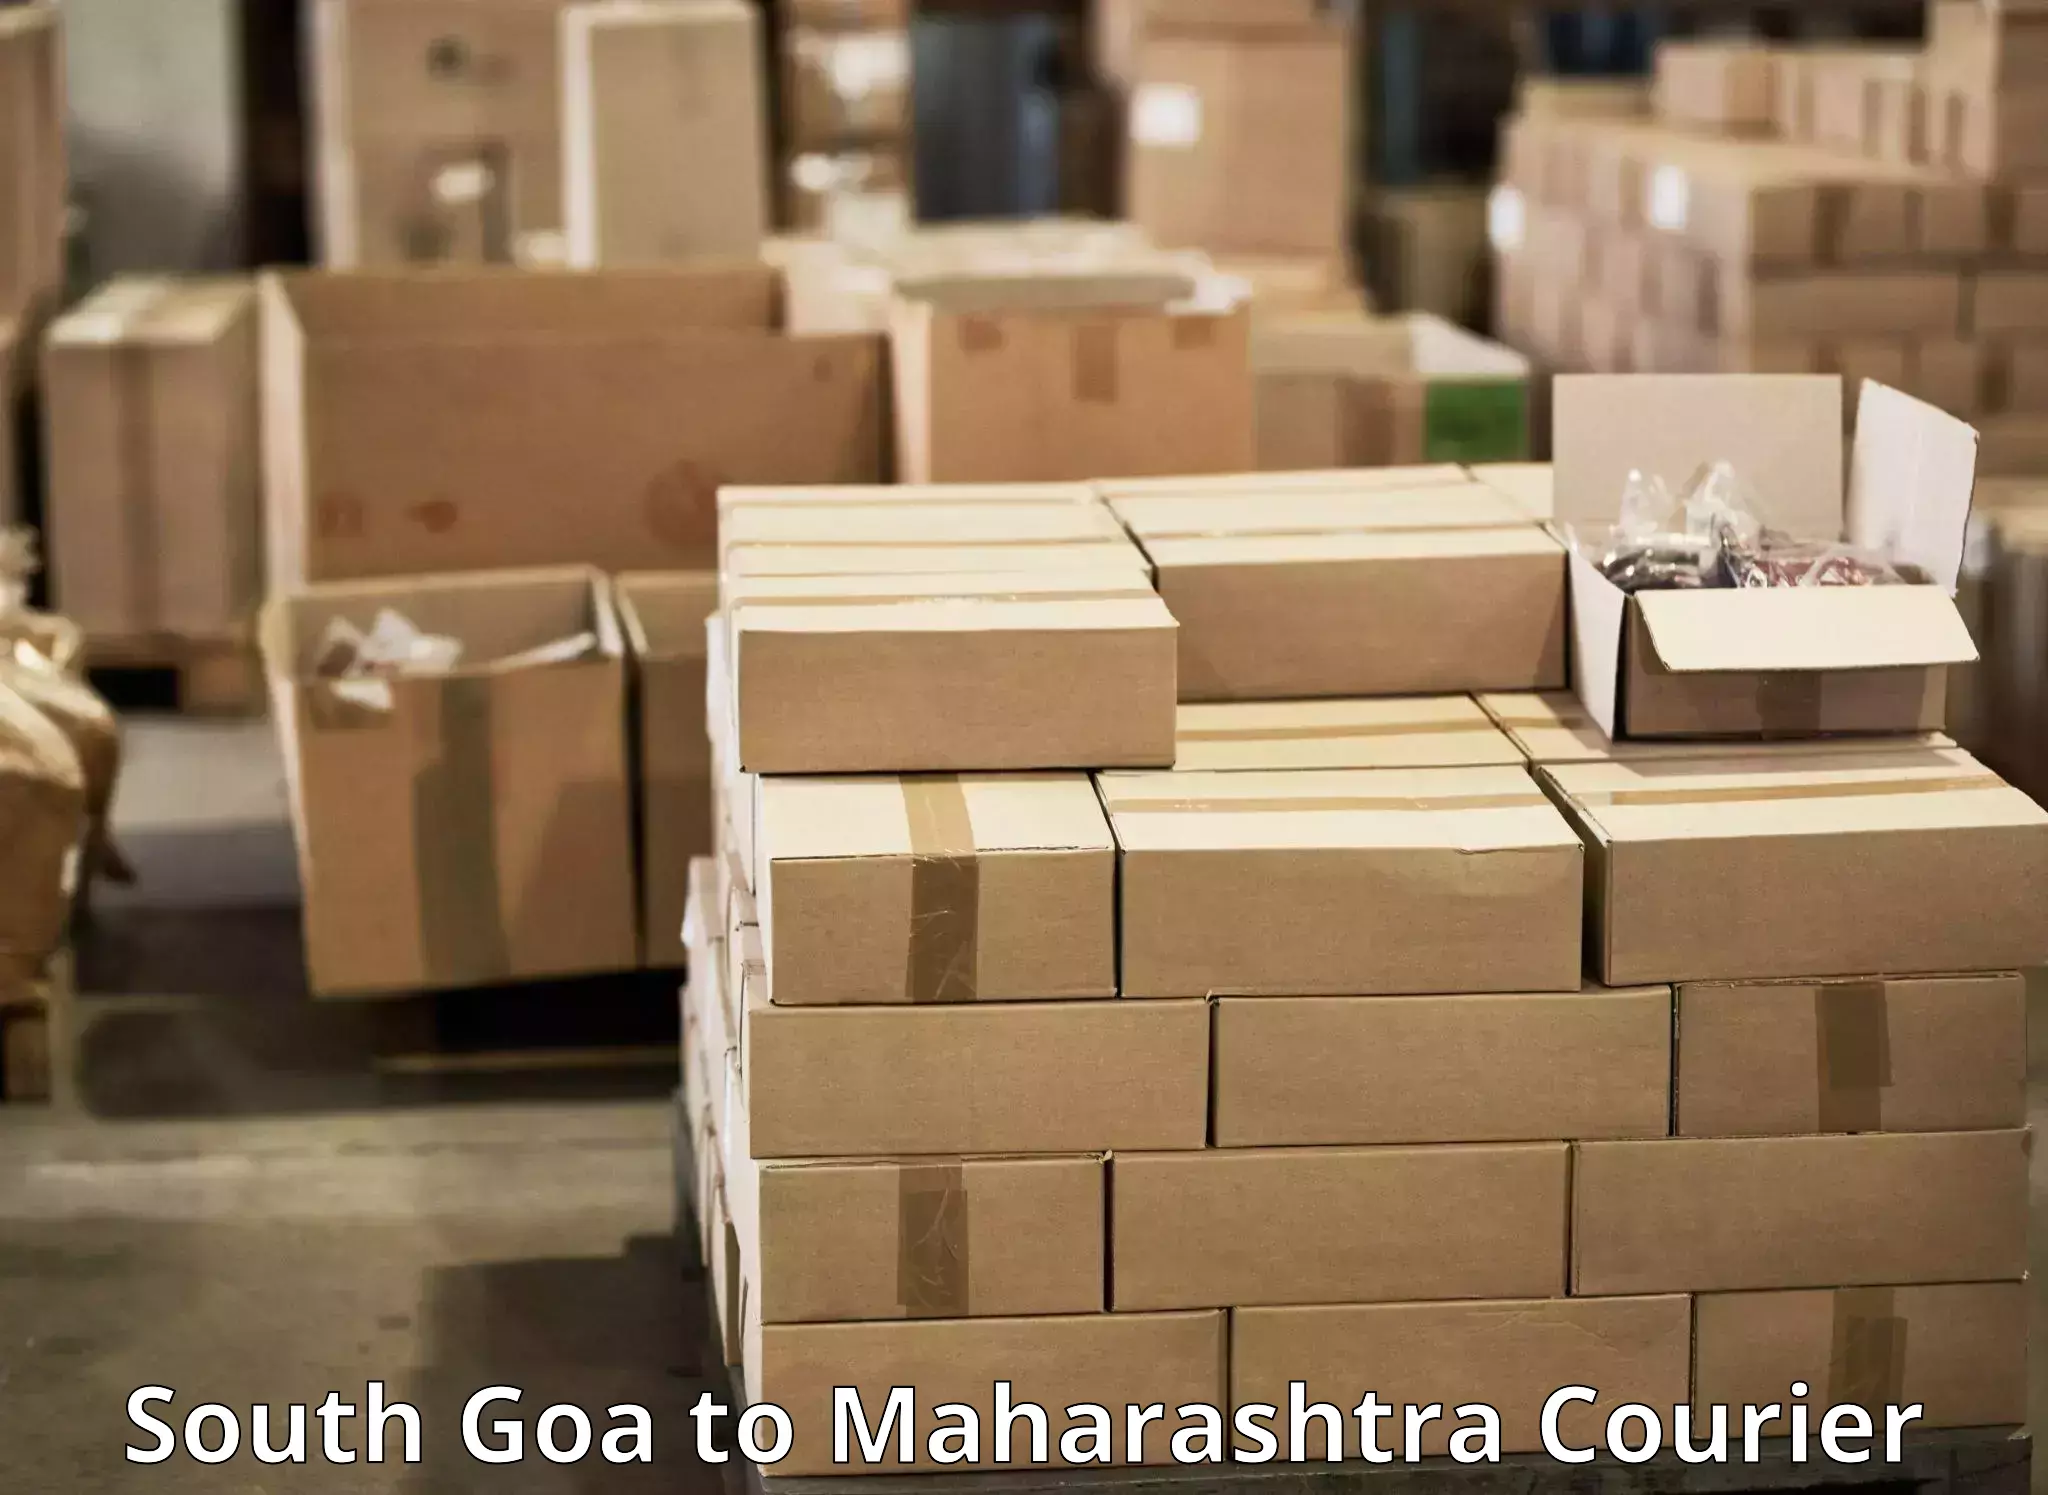 Courier service innovation South Goa to Maharashtra